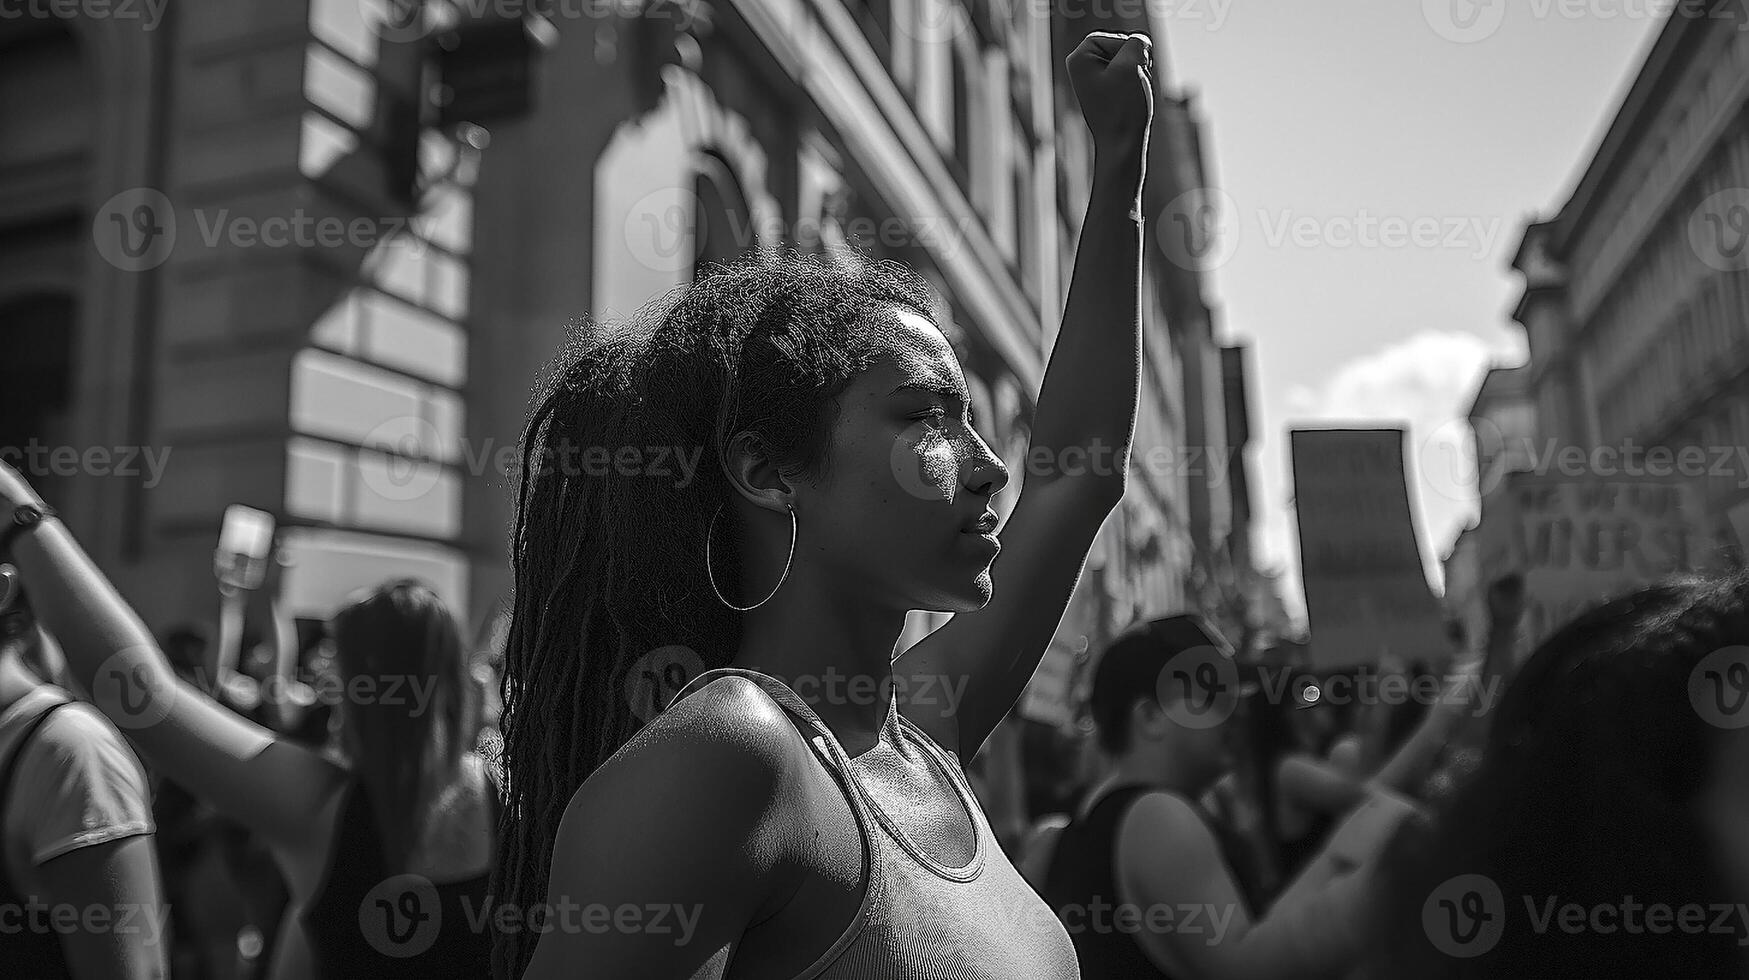 Black Lives Matter protests, equal rights demo, illustration, graphic, photo